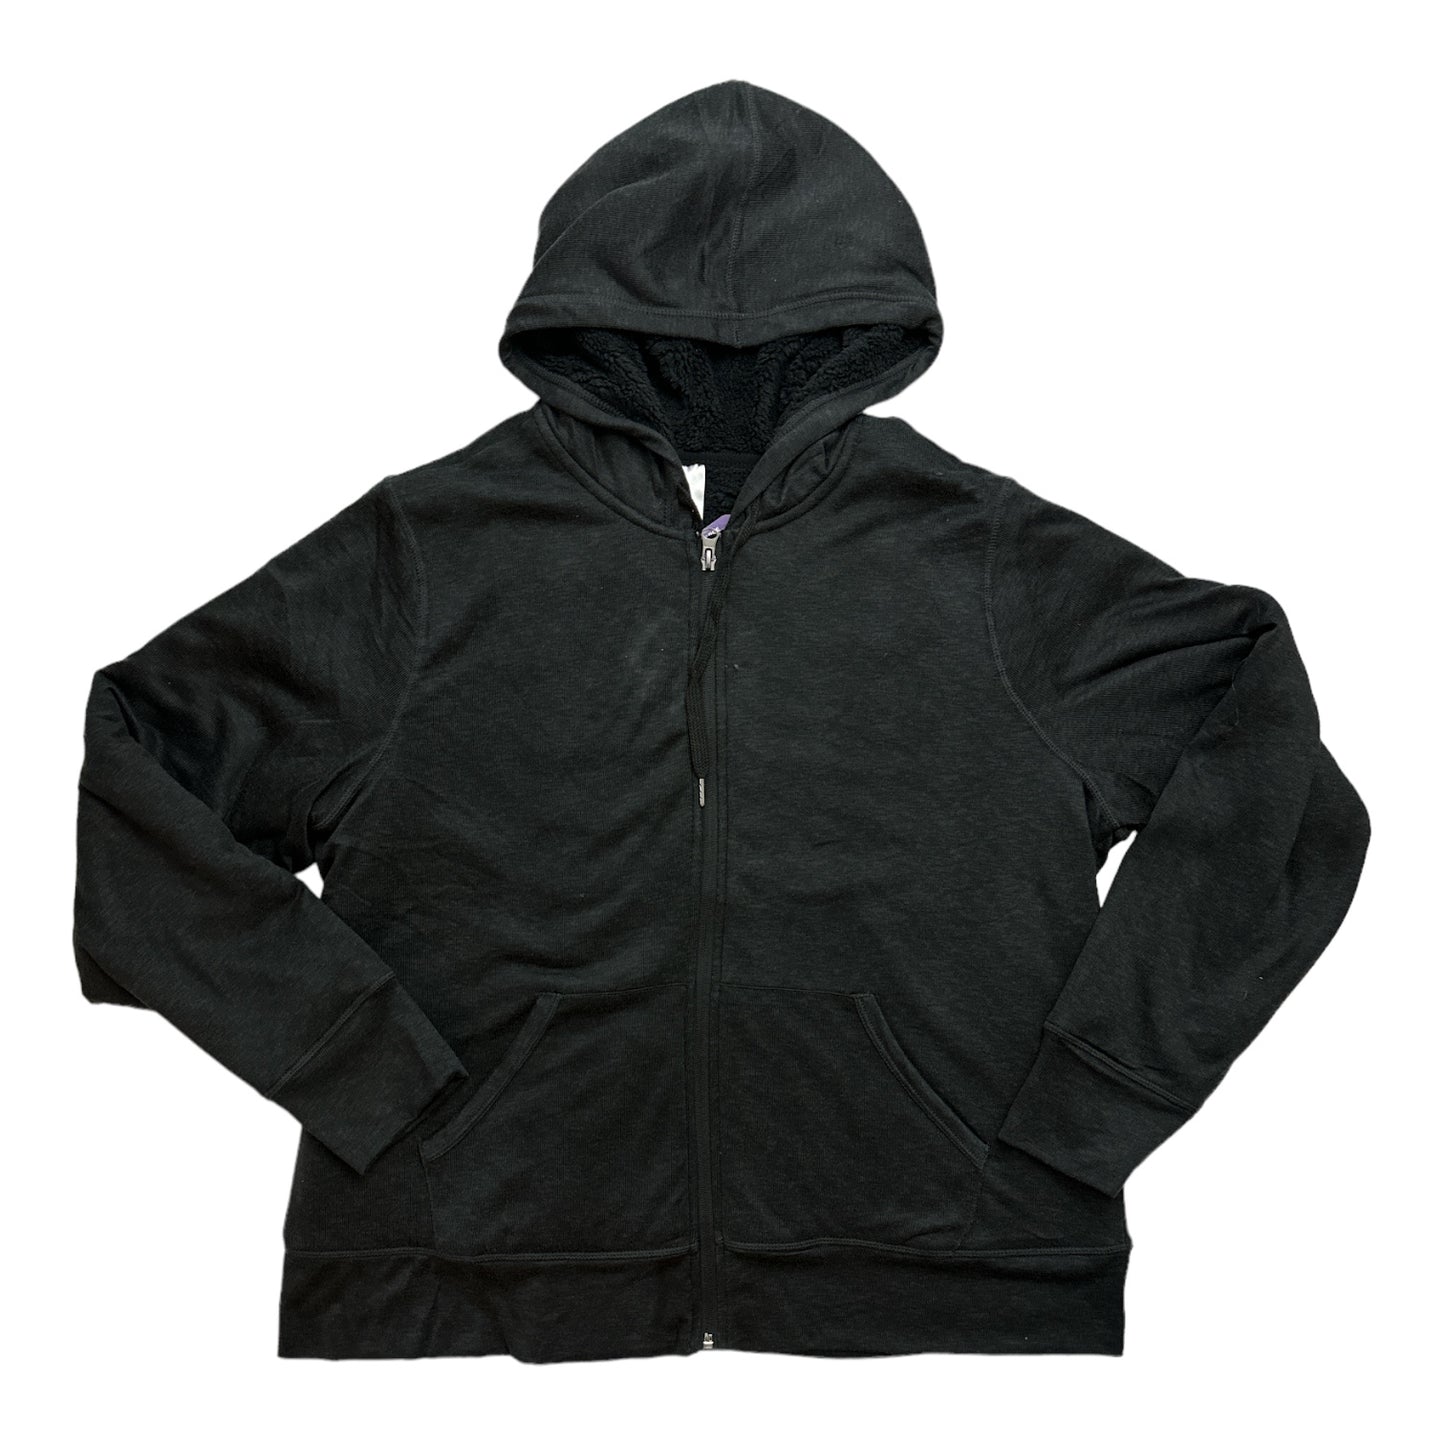 Member's Mark Women's Buttery Soft 4-Way Stretch Sherpa Lined Jacket